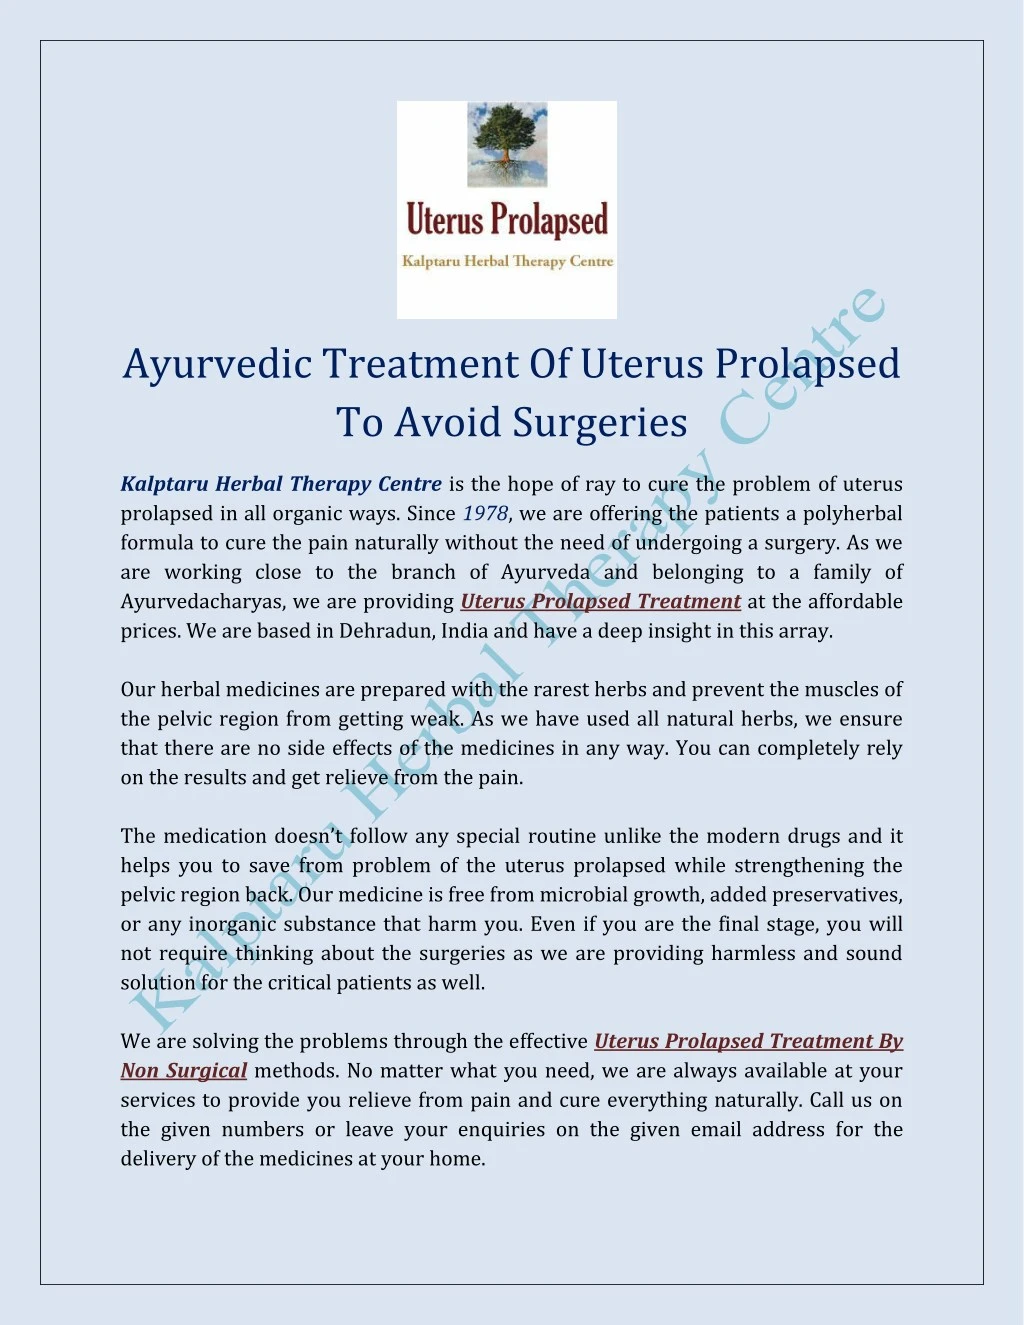 Ayurvedic Treatment Of Uterus Prolapsed To Avoid Surgeries